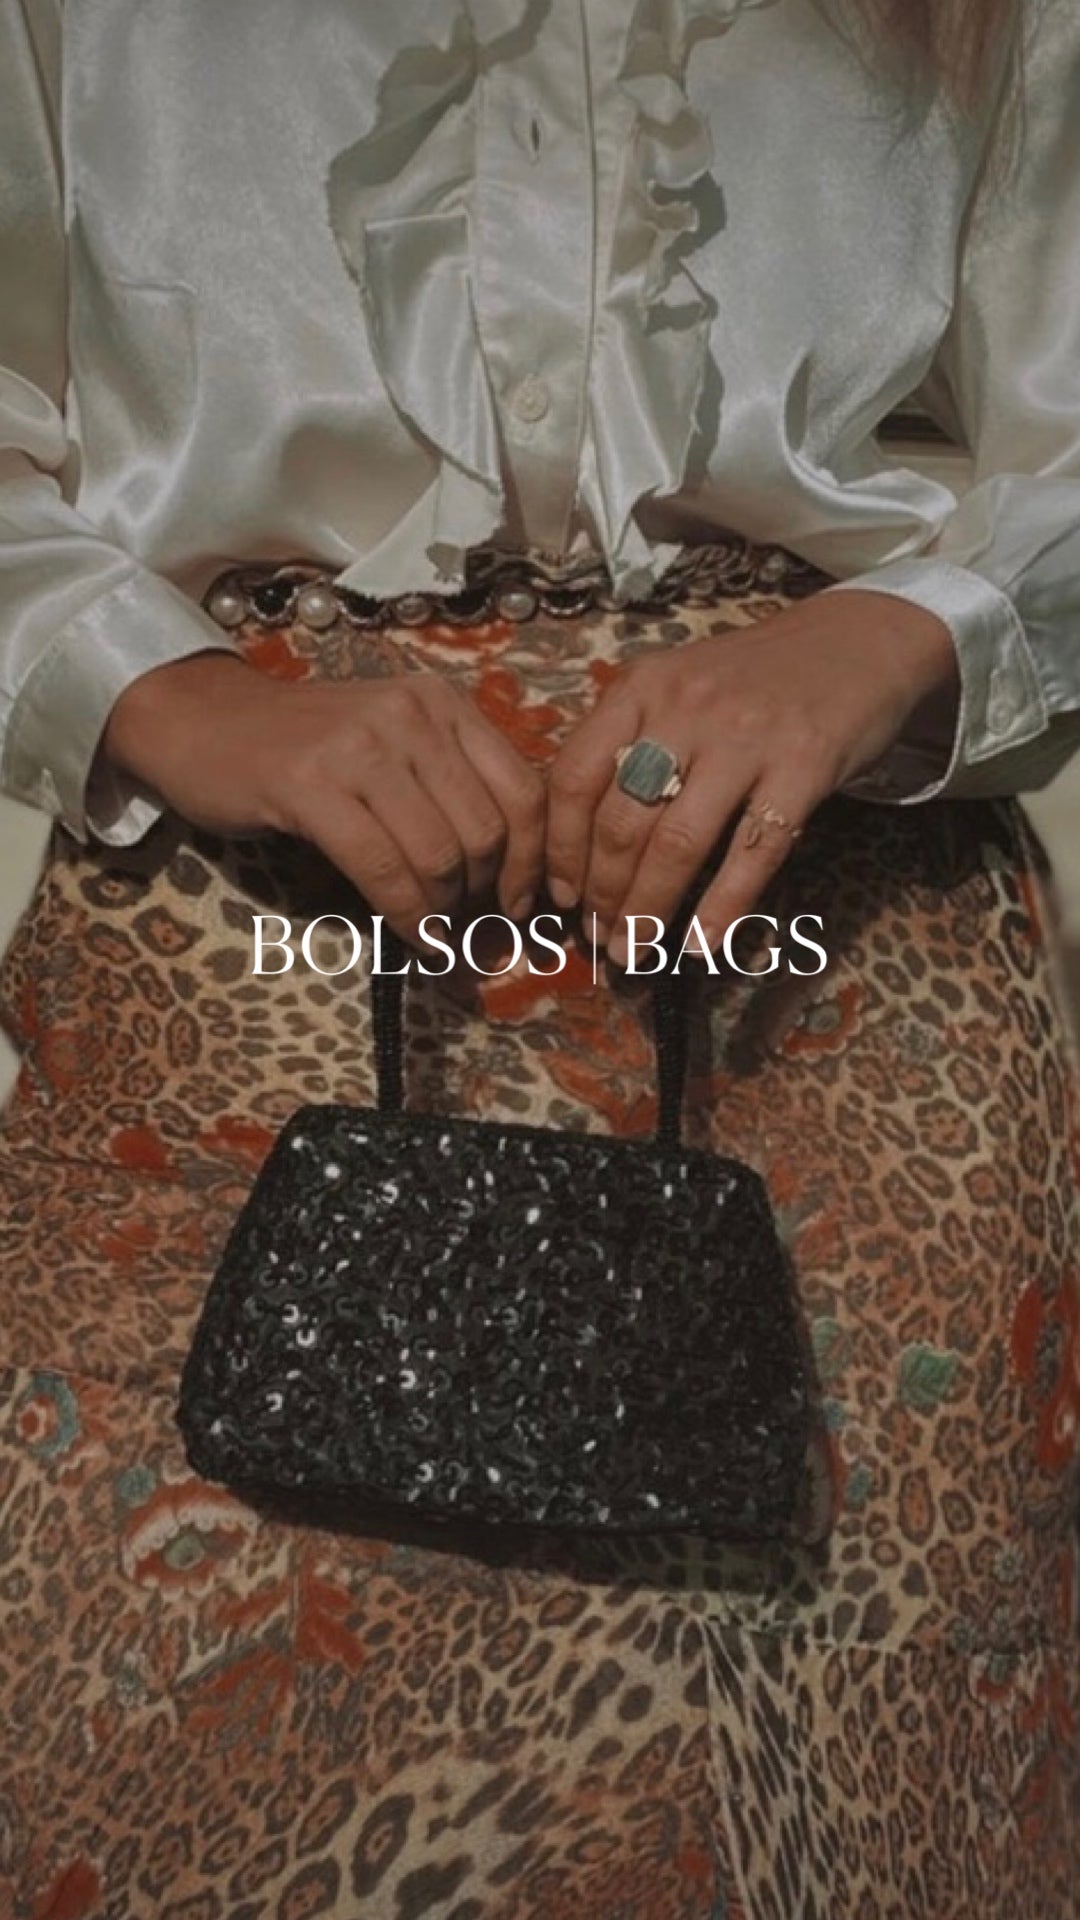 BOLSOS | BAGS